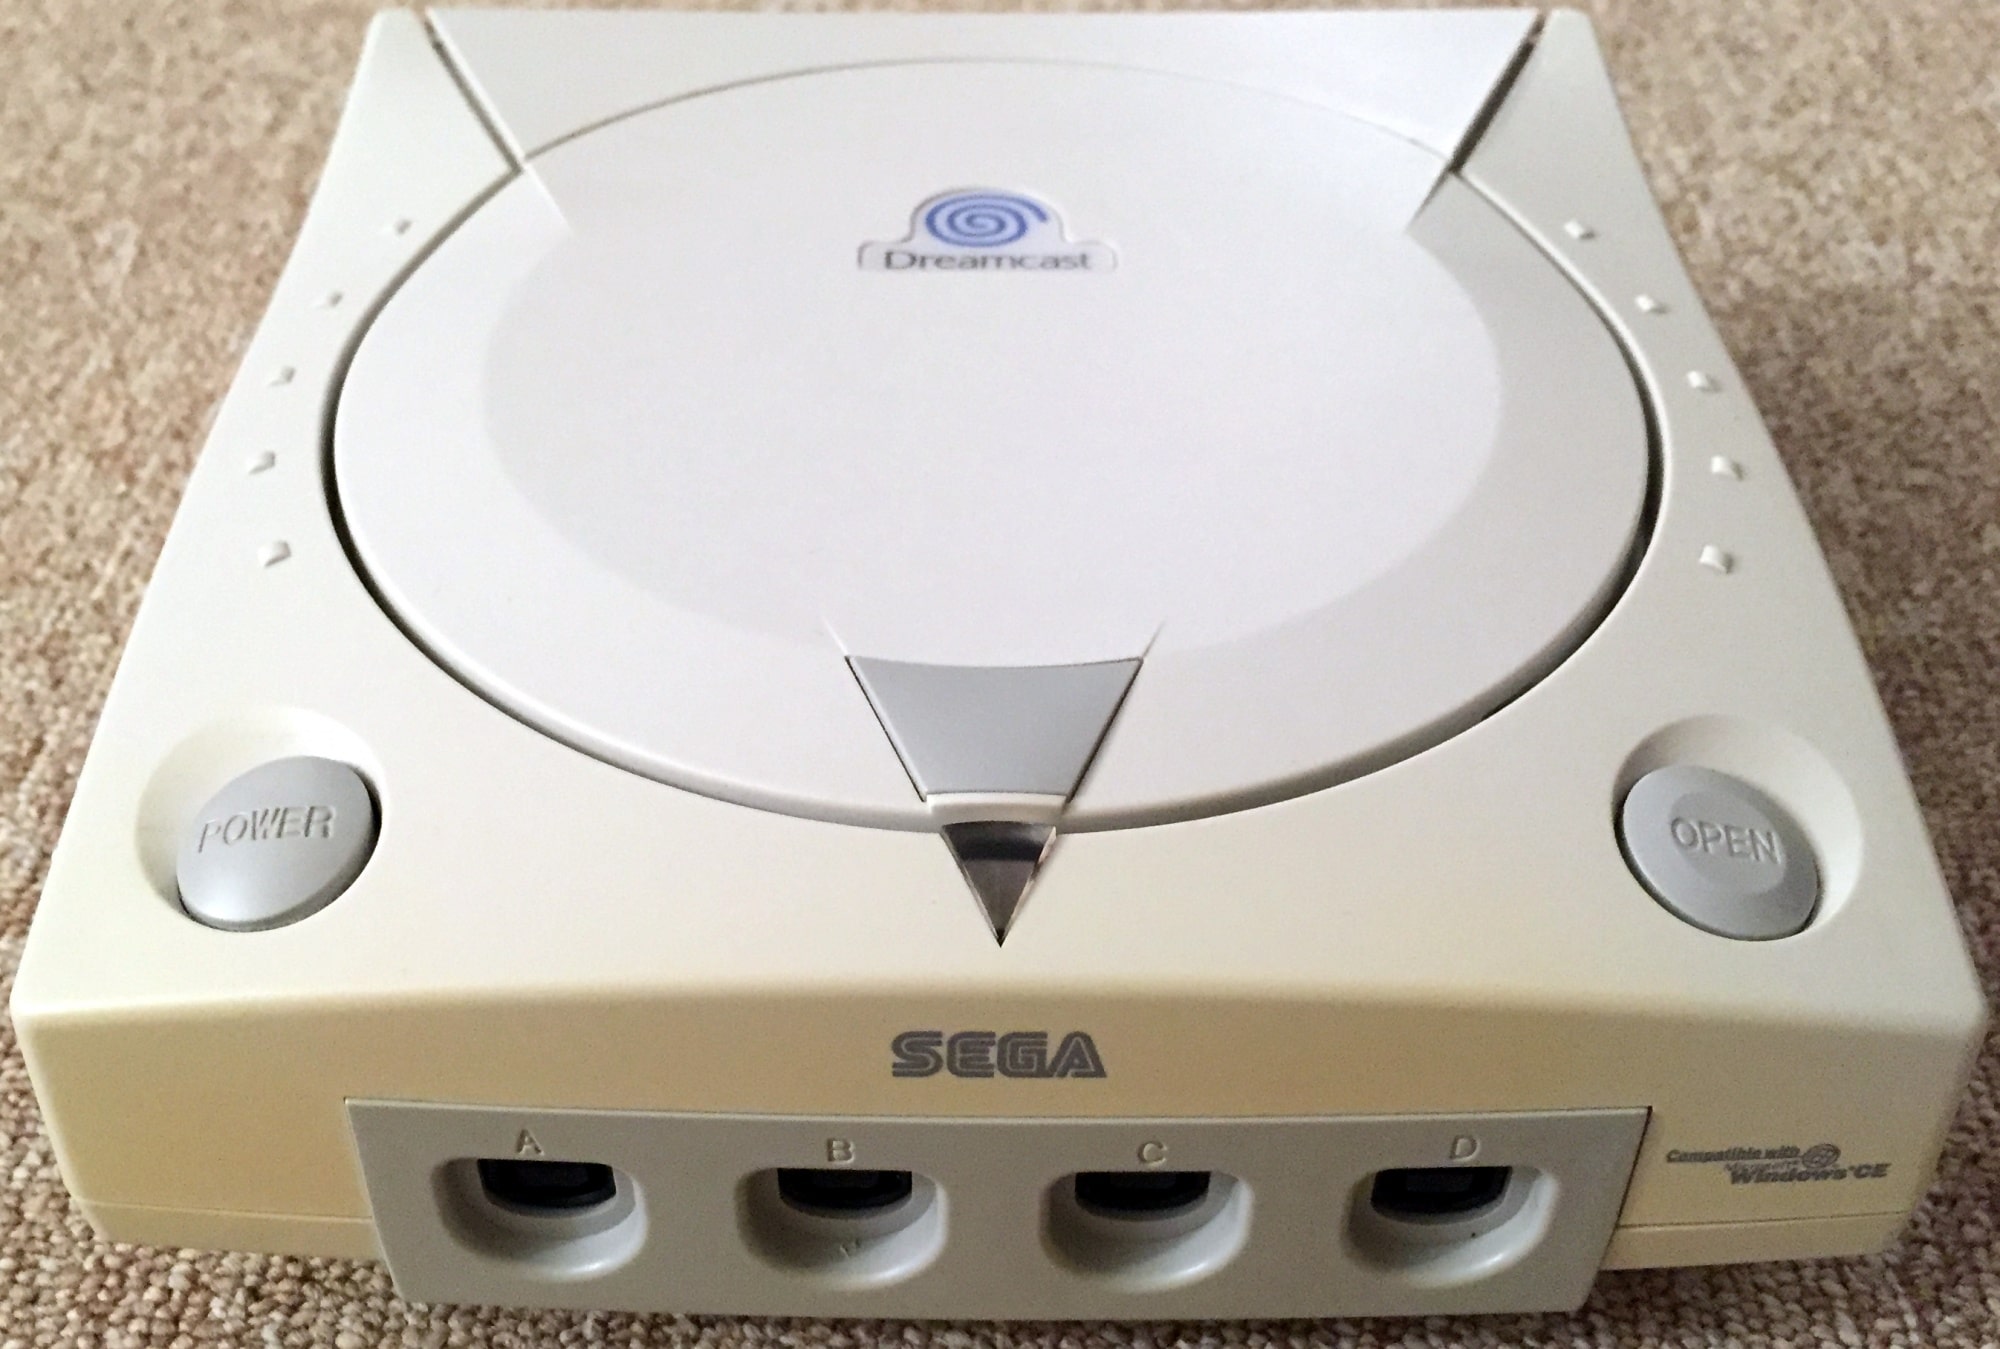 Sega: Bad chances for Dreamcast or Saturn in mini format - News